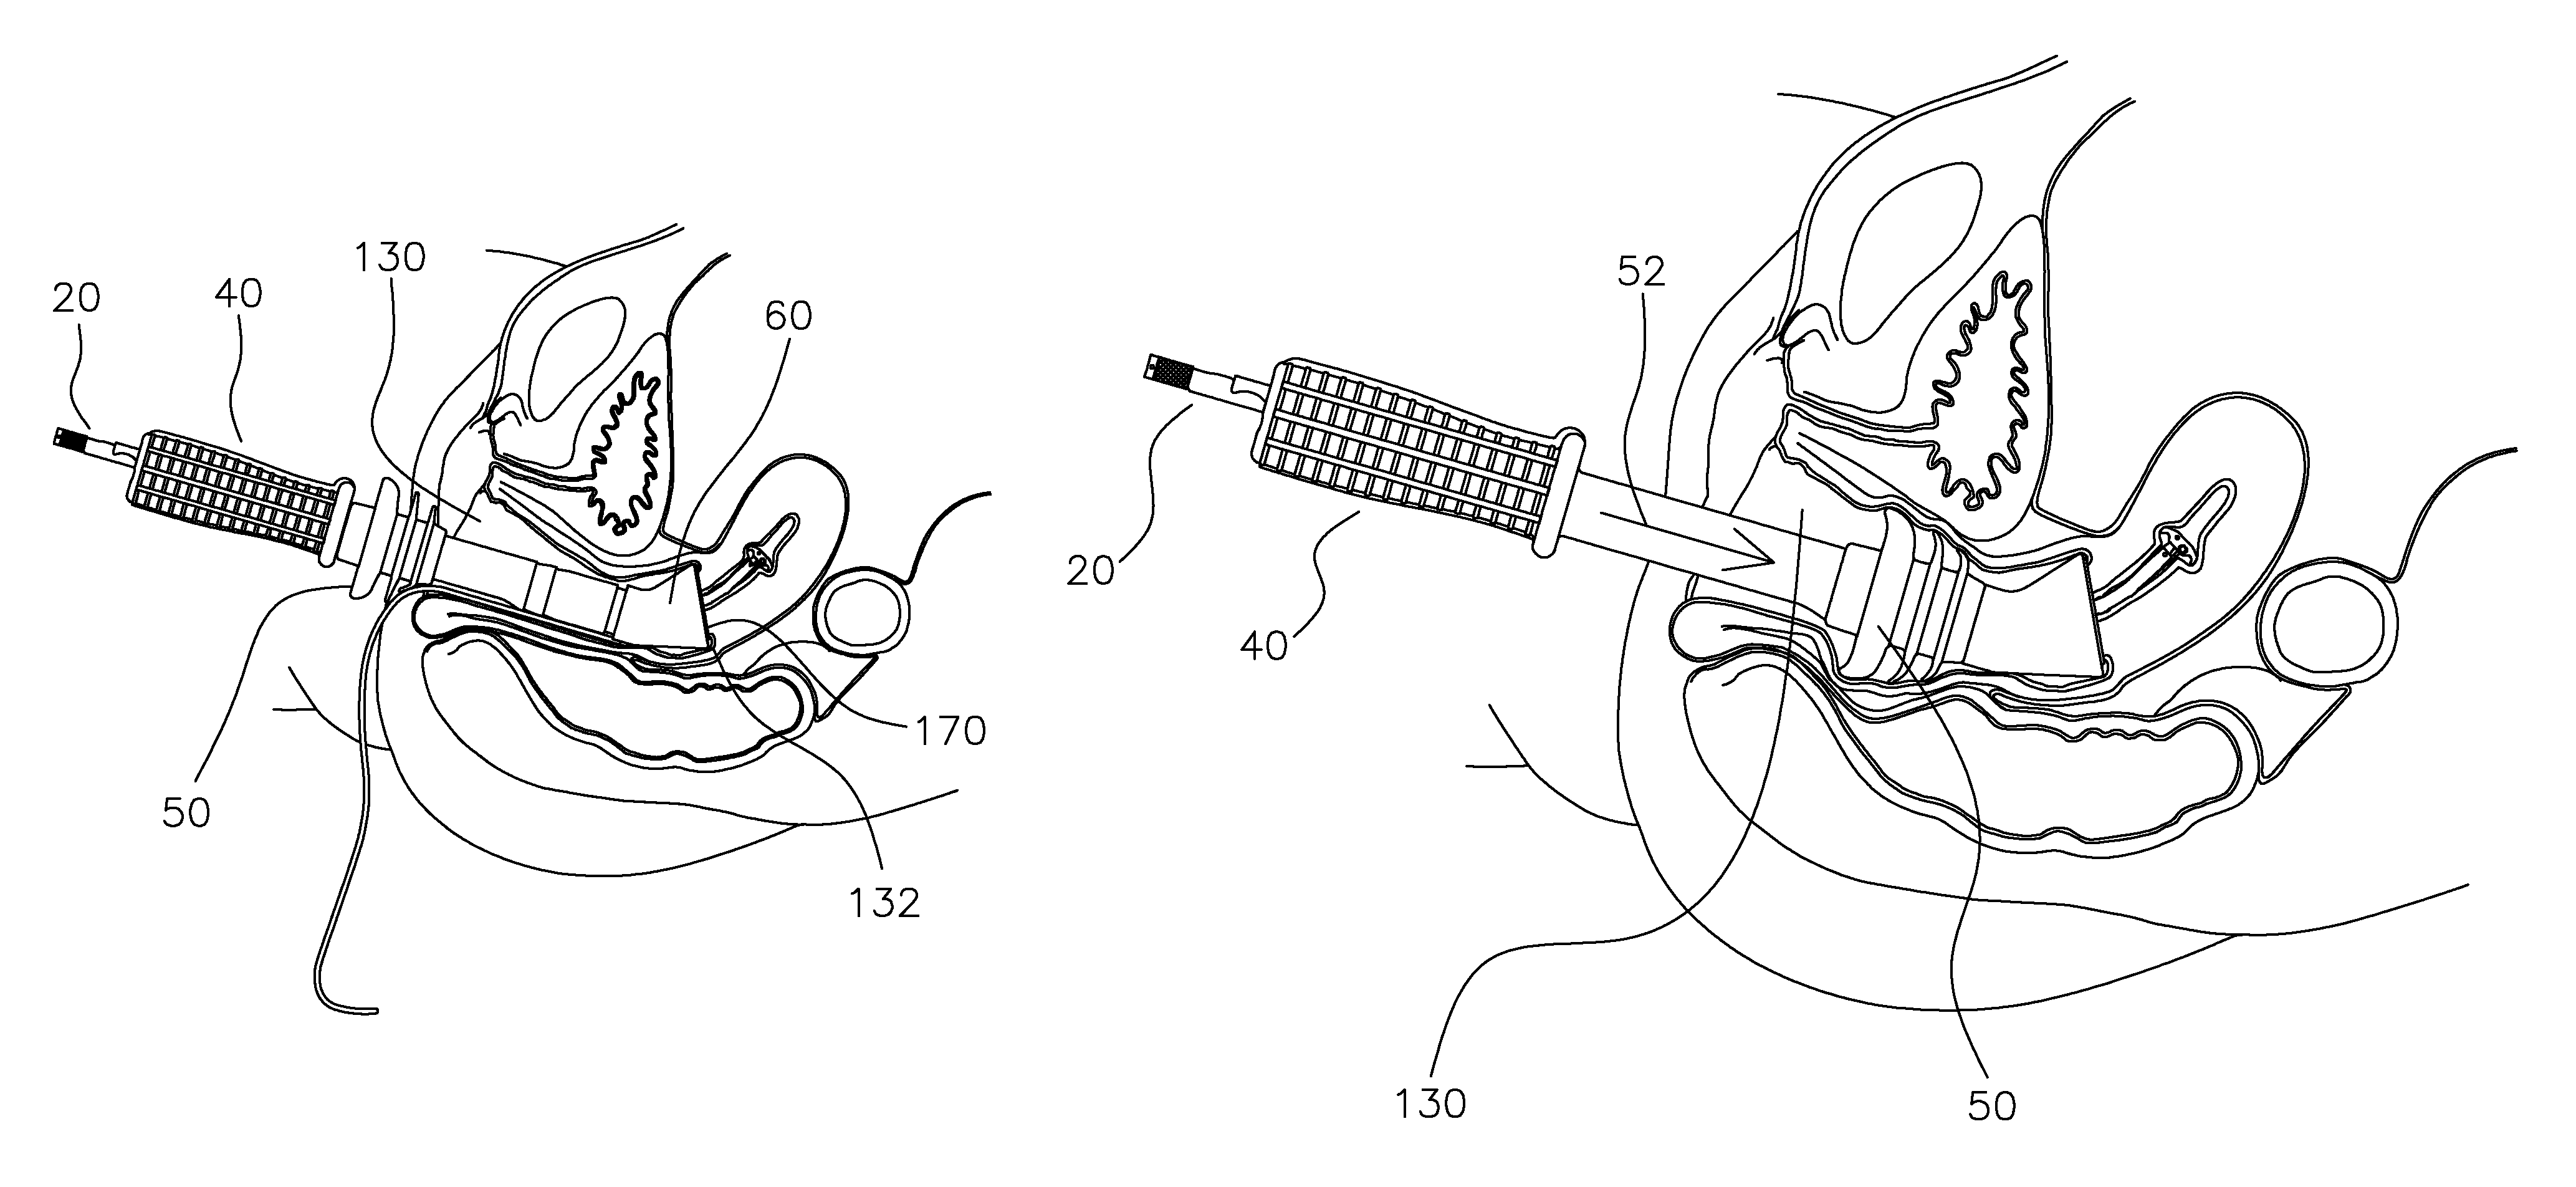 Ergonomic, lighted uterine manipulator with cautery